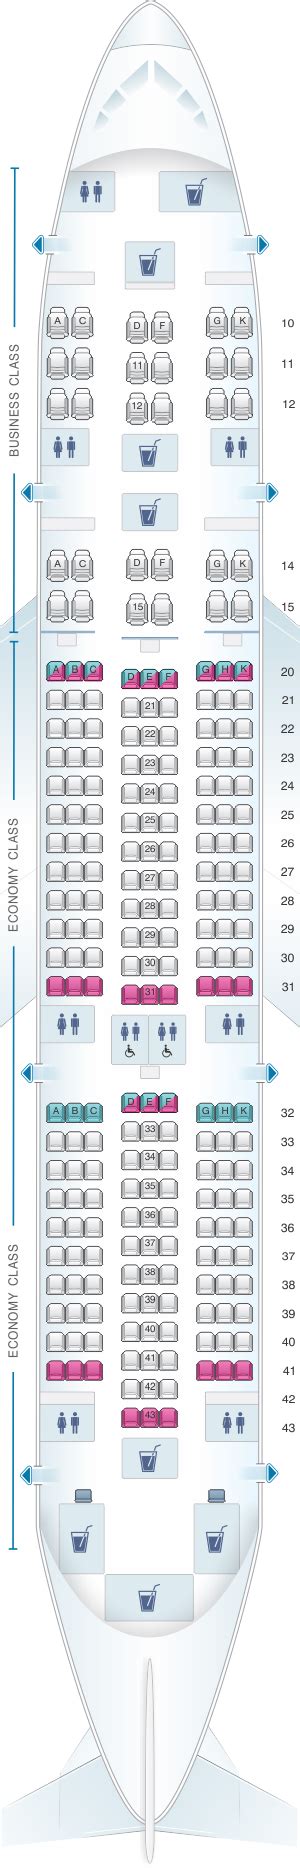 Oman Air 787 Seat Map